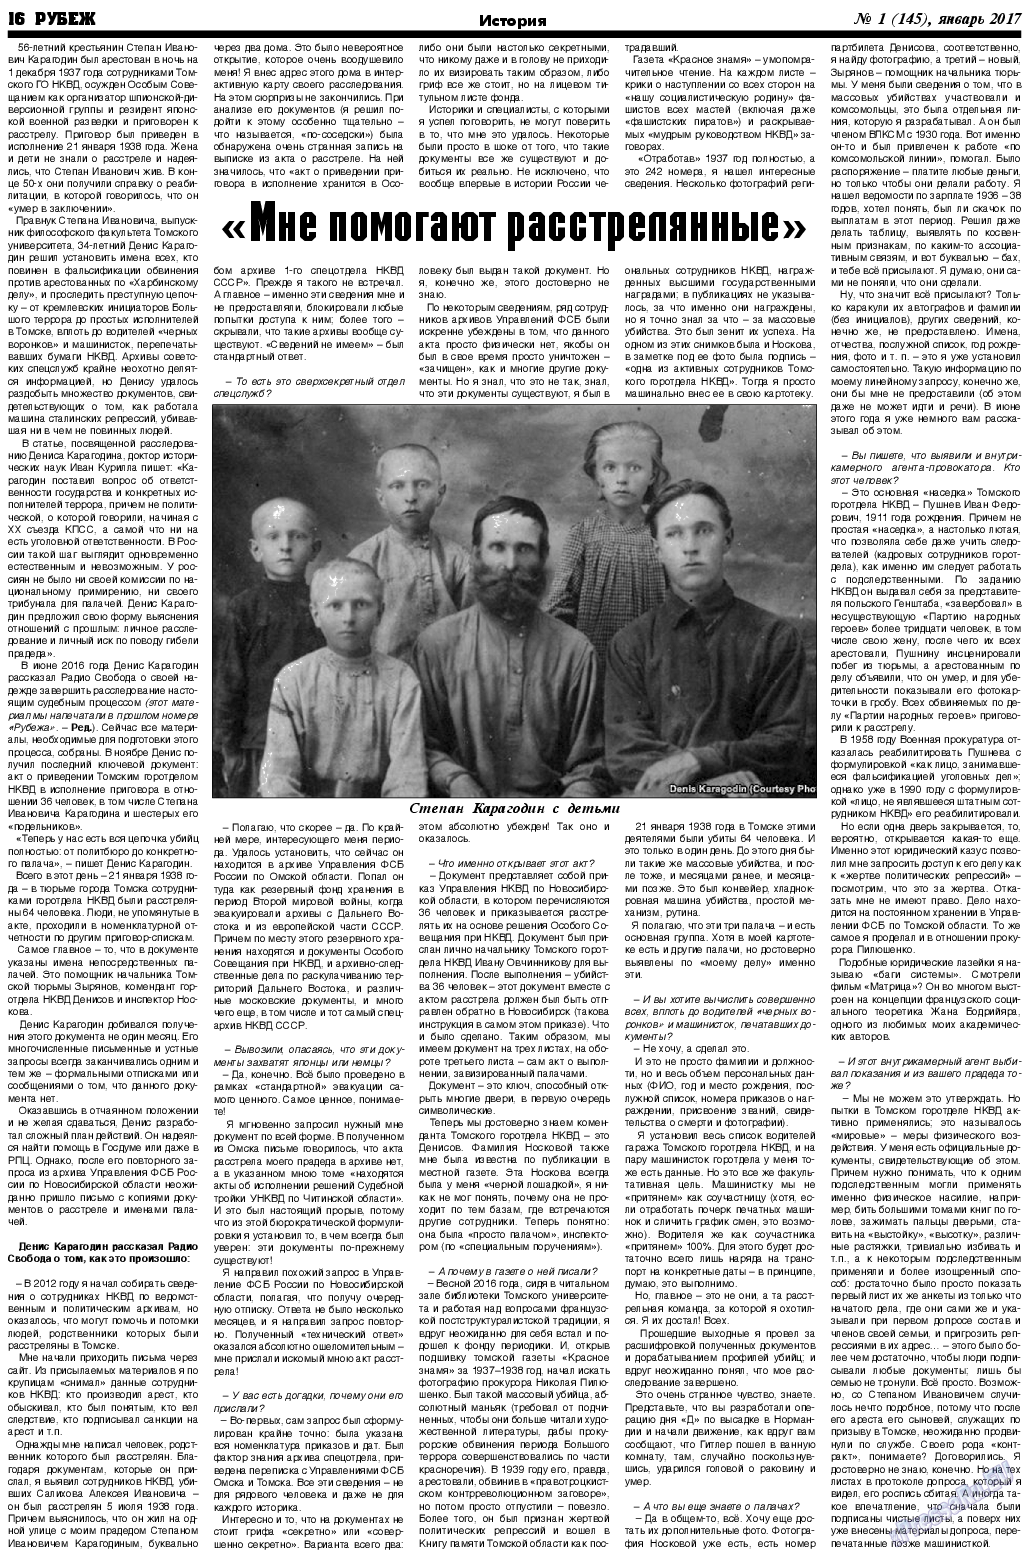 Рубеж, газета. 2017 №1 стр.16